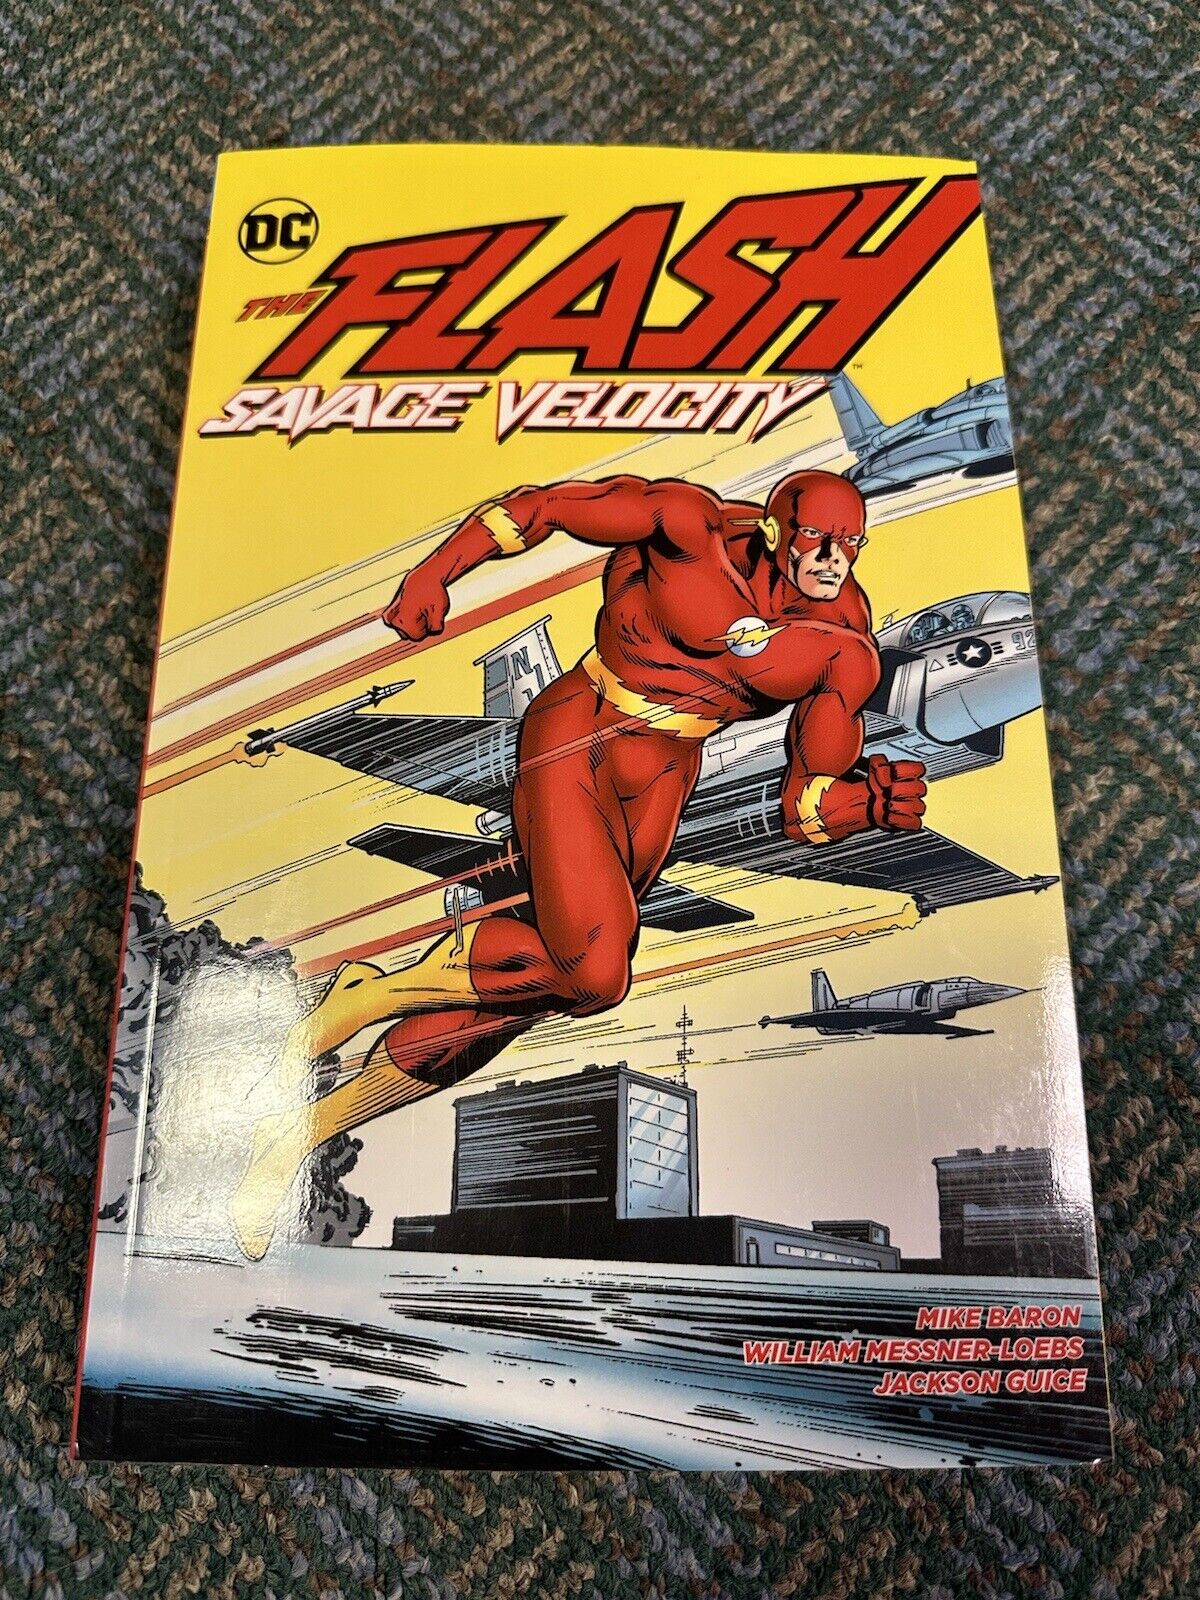 The Flash Savage Velocity